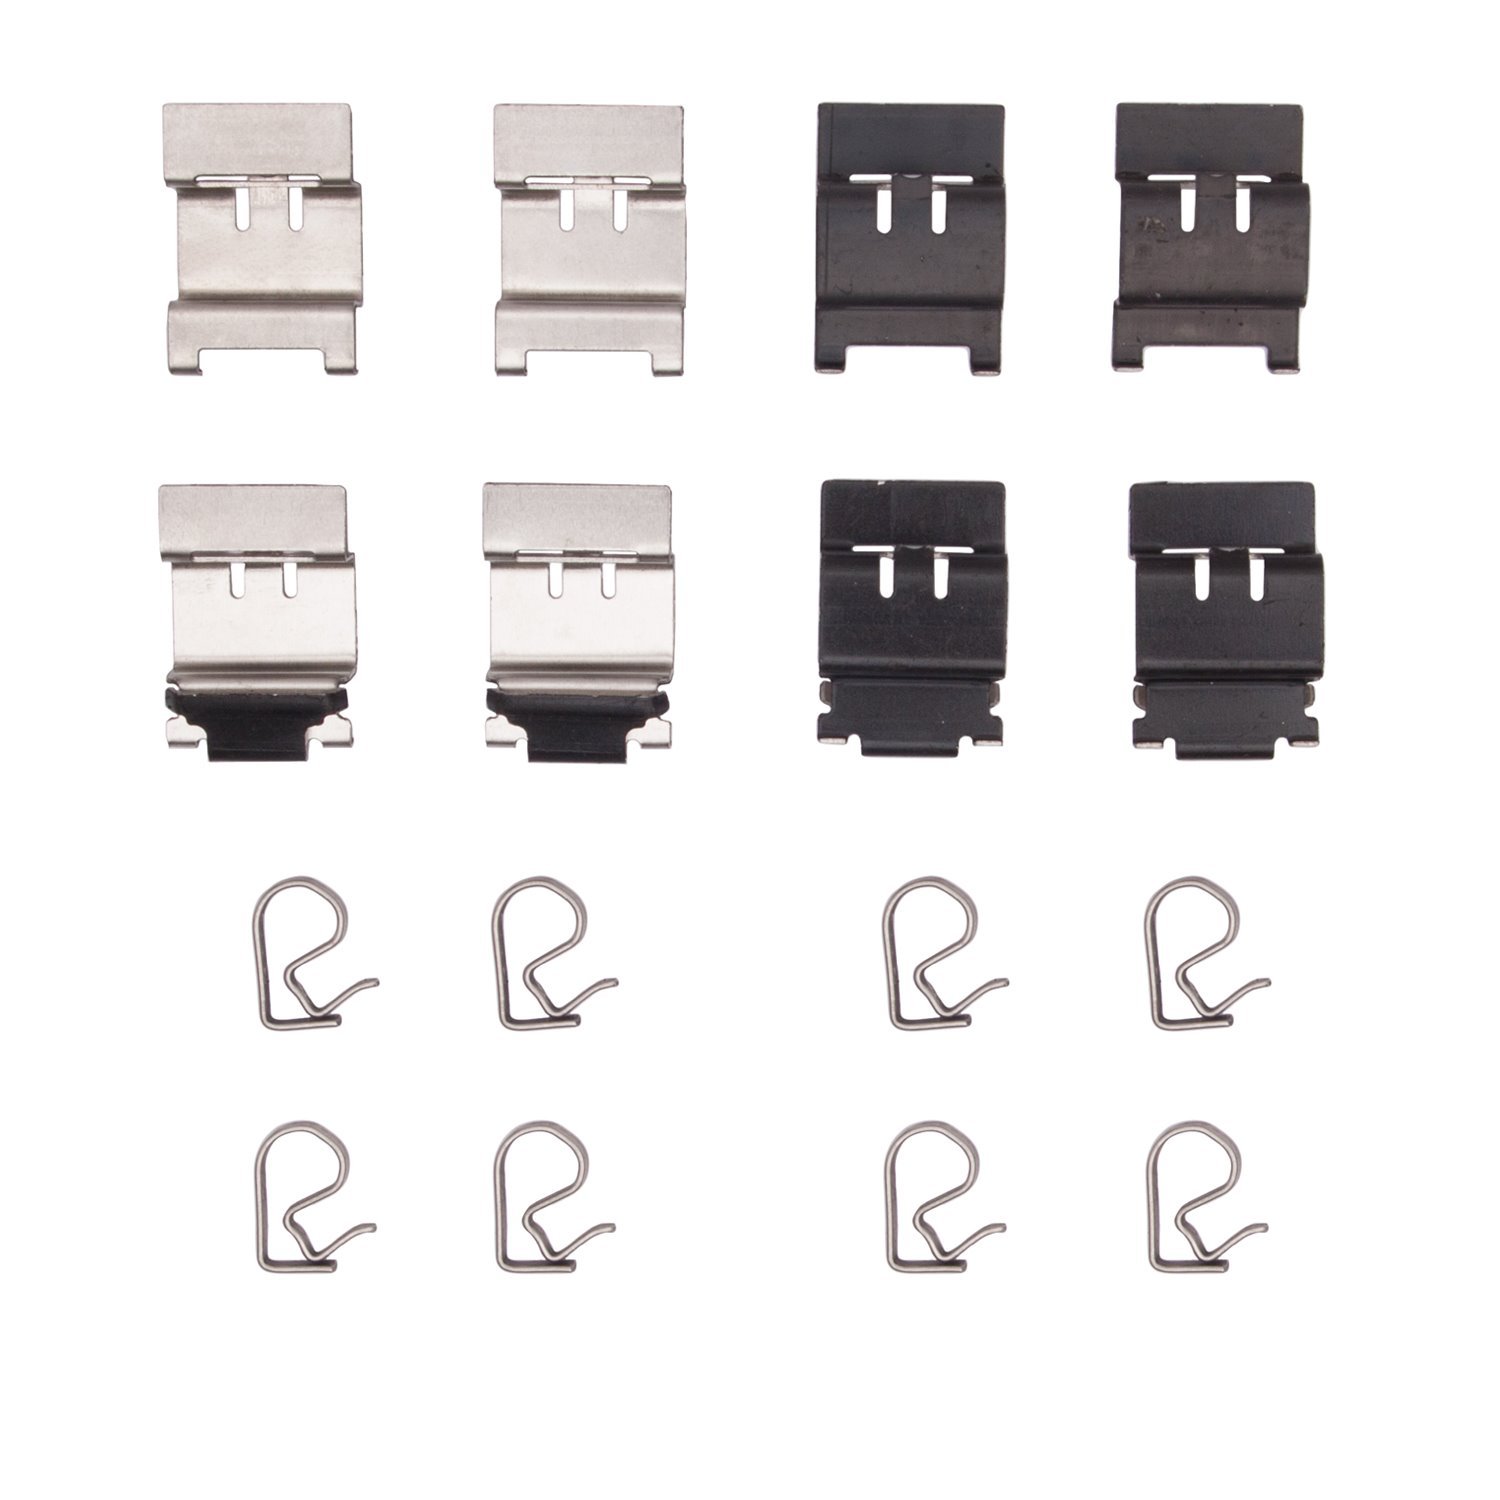 Disc Brake Hardware Kit, Fits Select Fits Multiple Makes/Models, Position: Rear